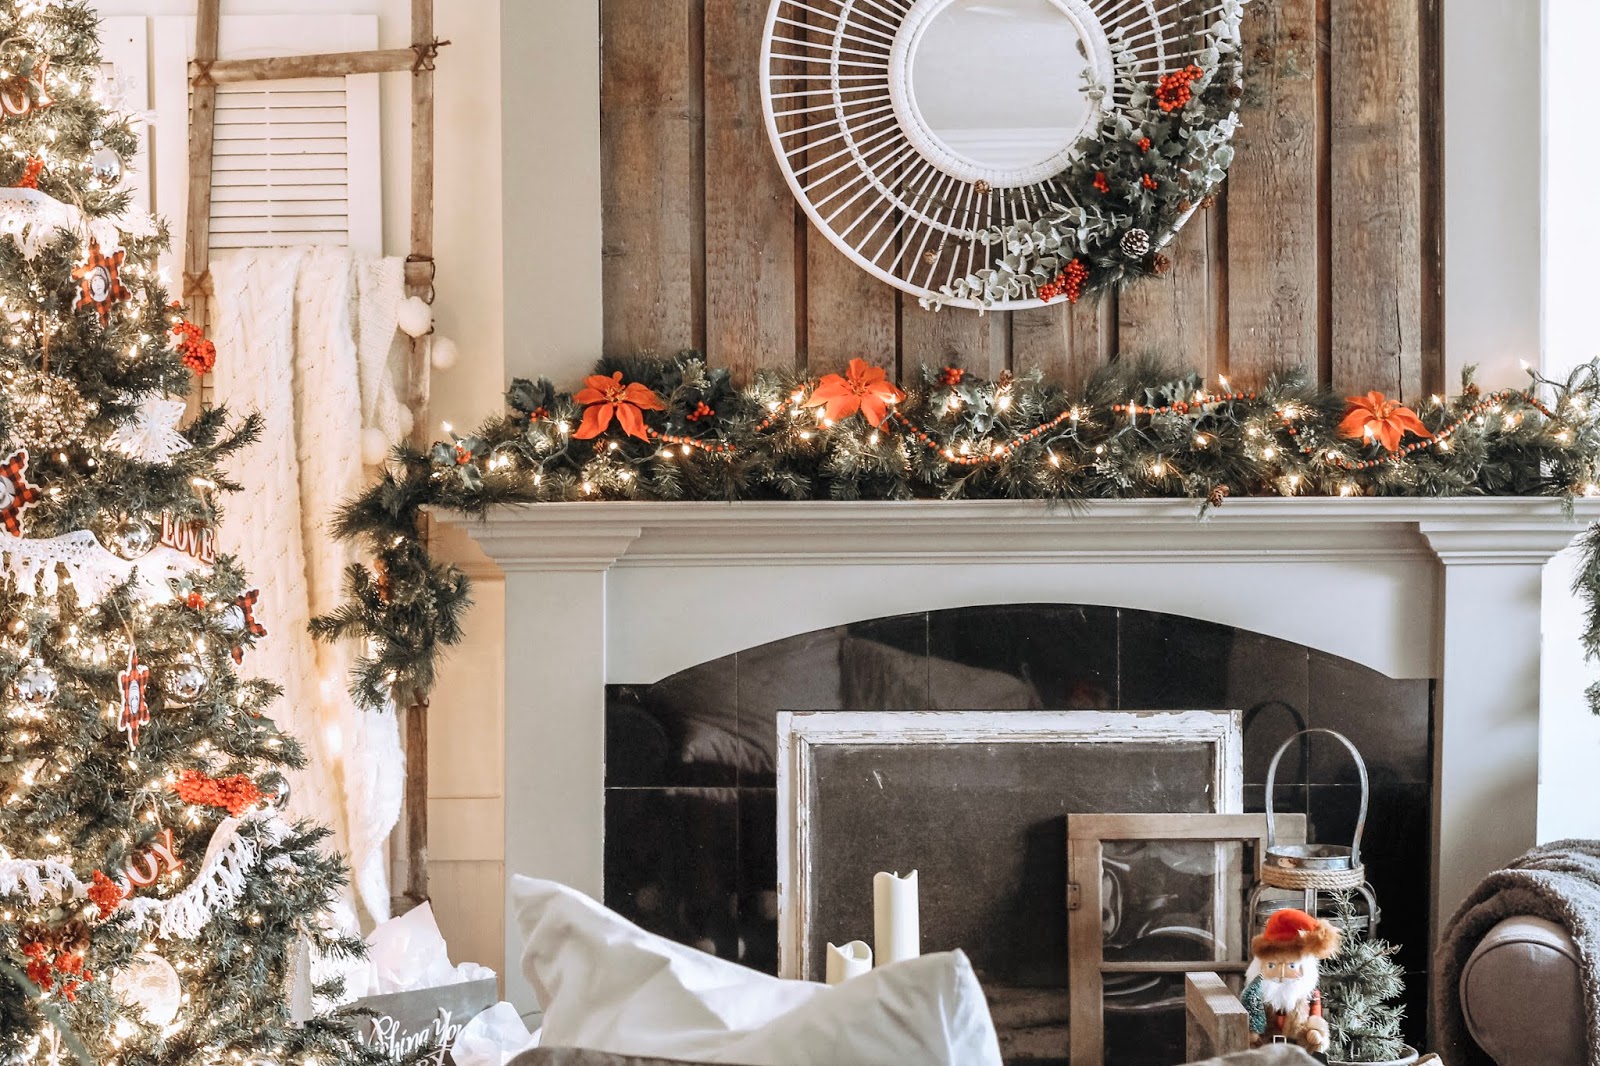 Our Christmas Living Room 2018